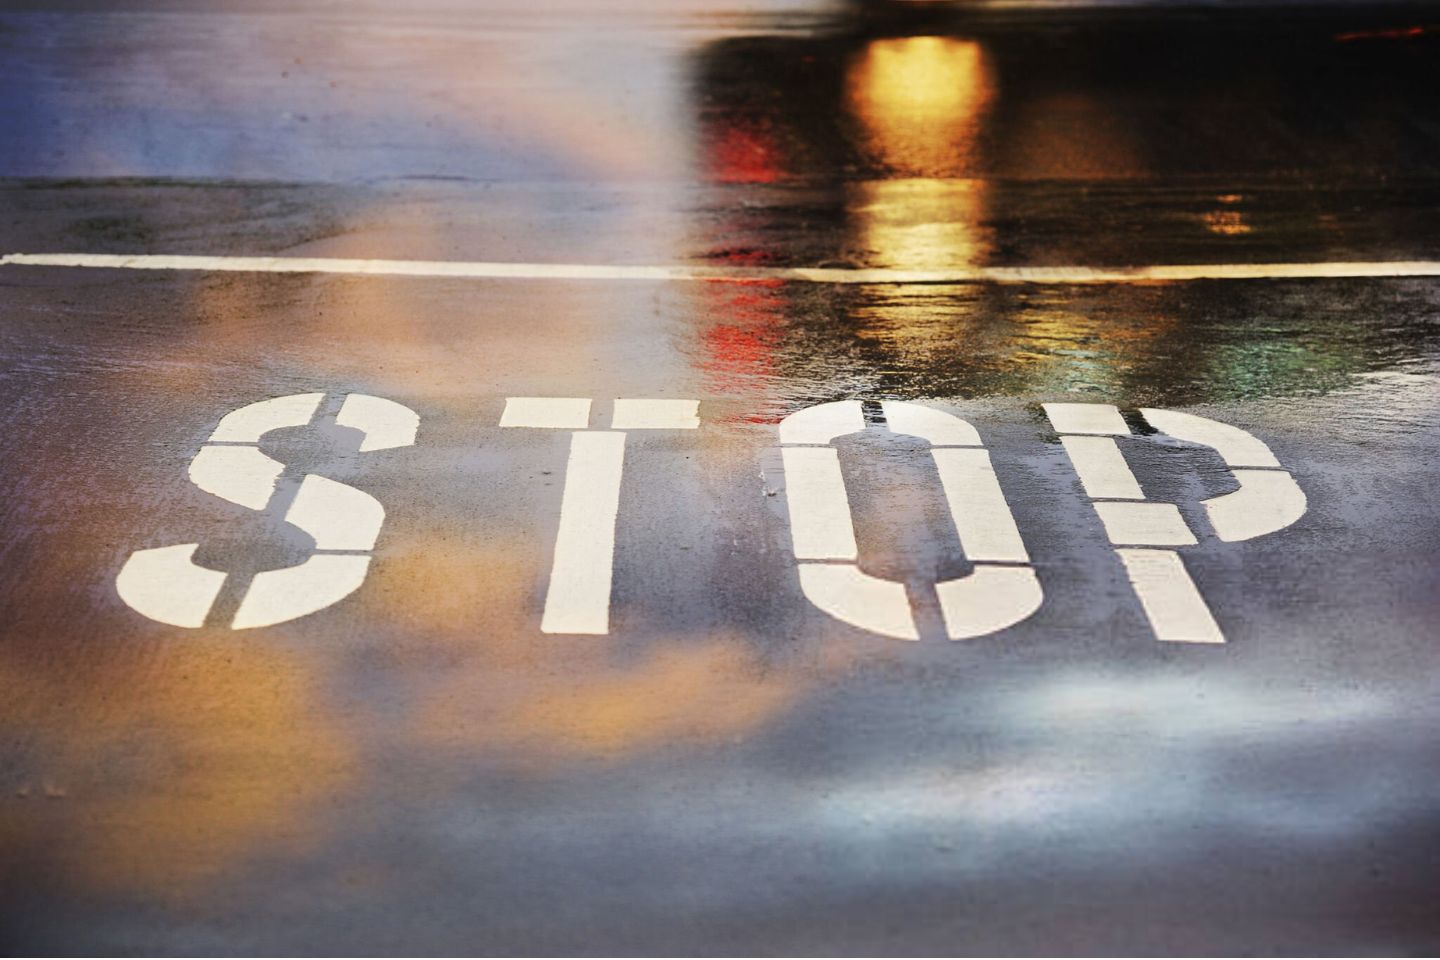 Stopping at Stop Signs